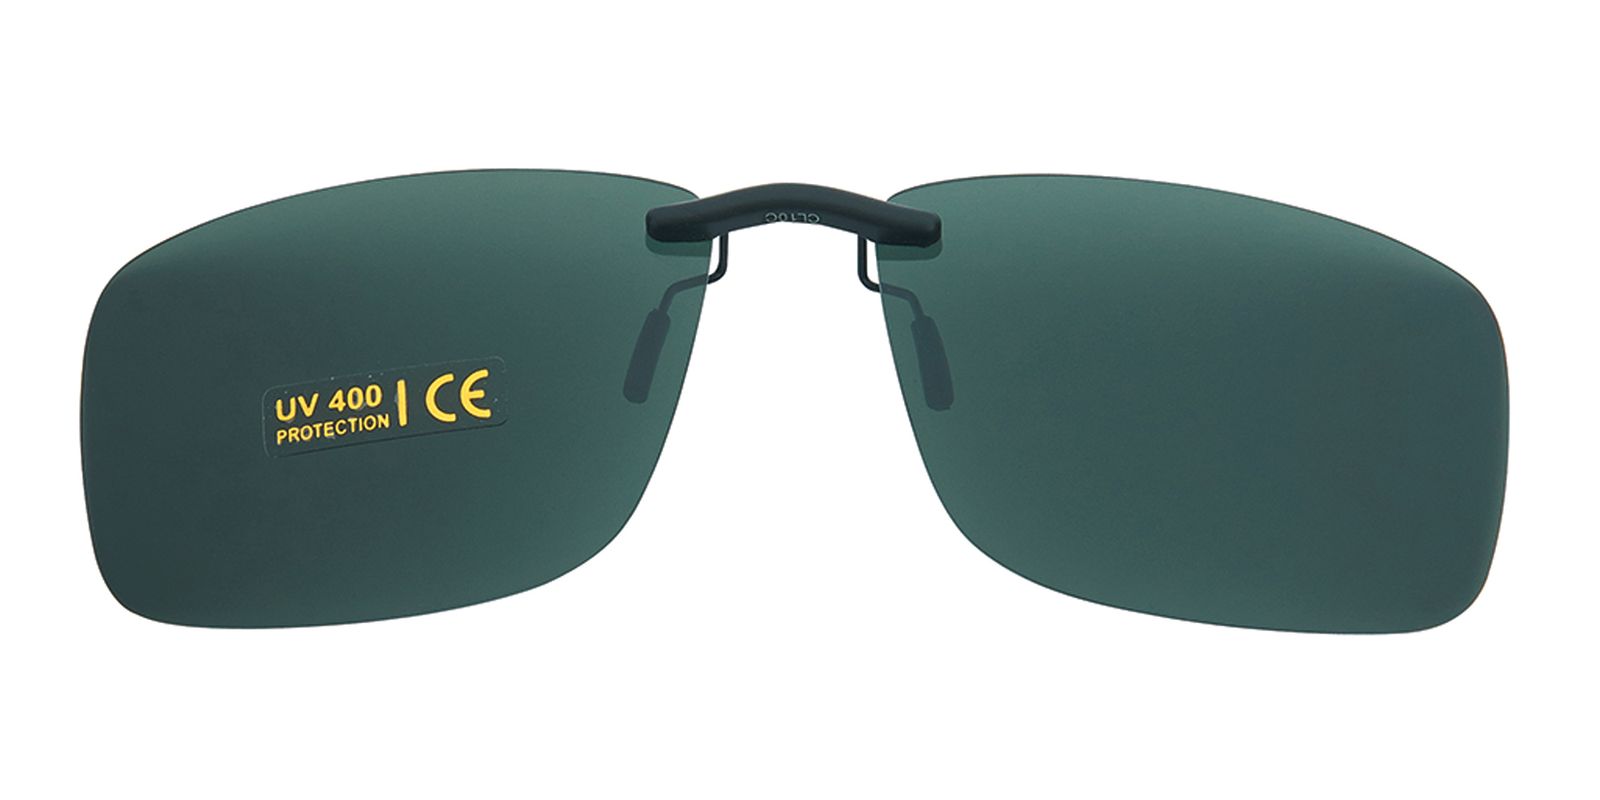 CL10 – Sunglasses Clip-on